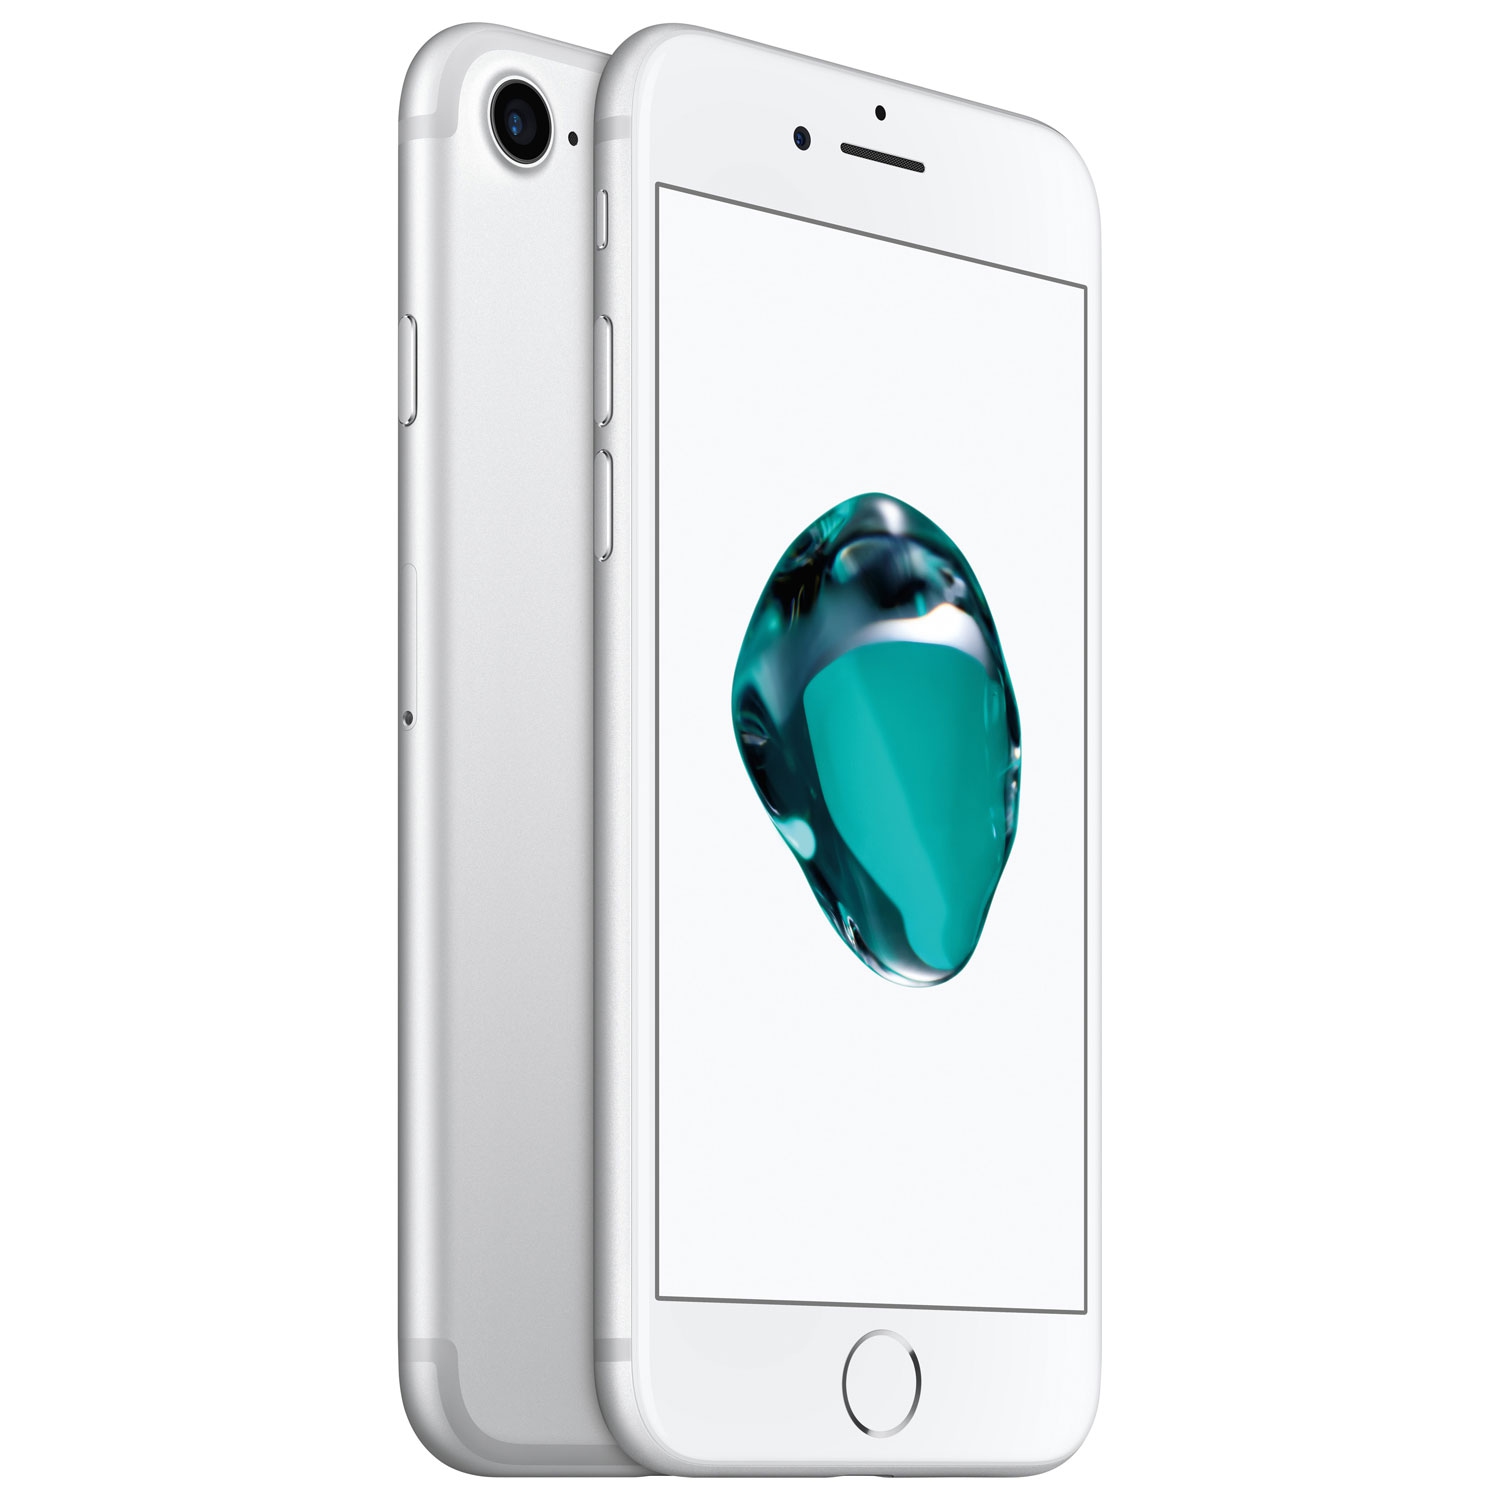 Refurbished (Excellent) - Apple iPhone 7 32GB Smartphone - Silver - Unlocked - Certified Refurbished